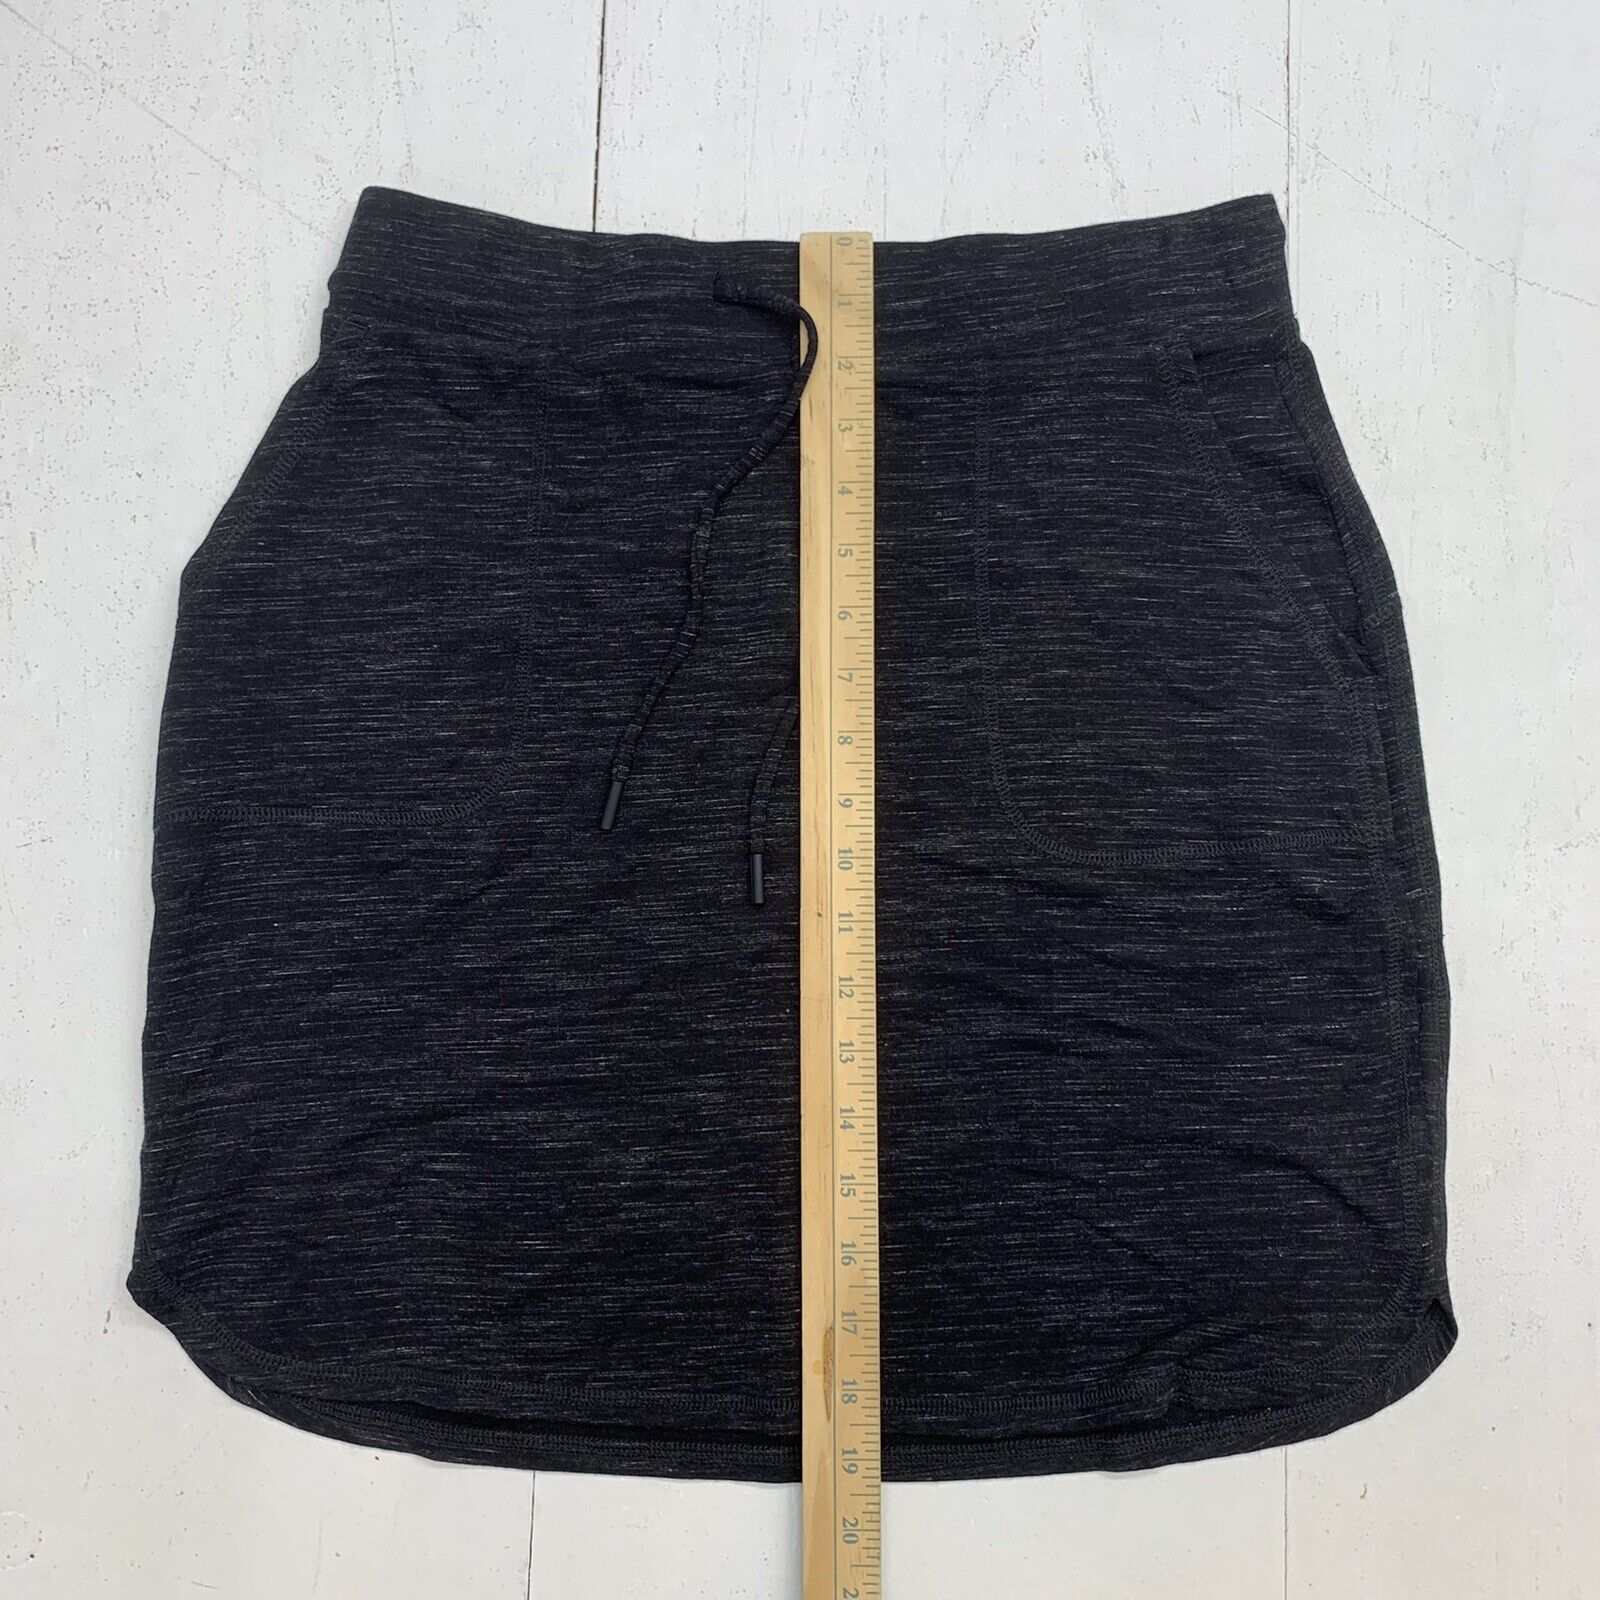 Hilary Radley Womens Black Drawstring Skirt size Medium - beyond exchange